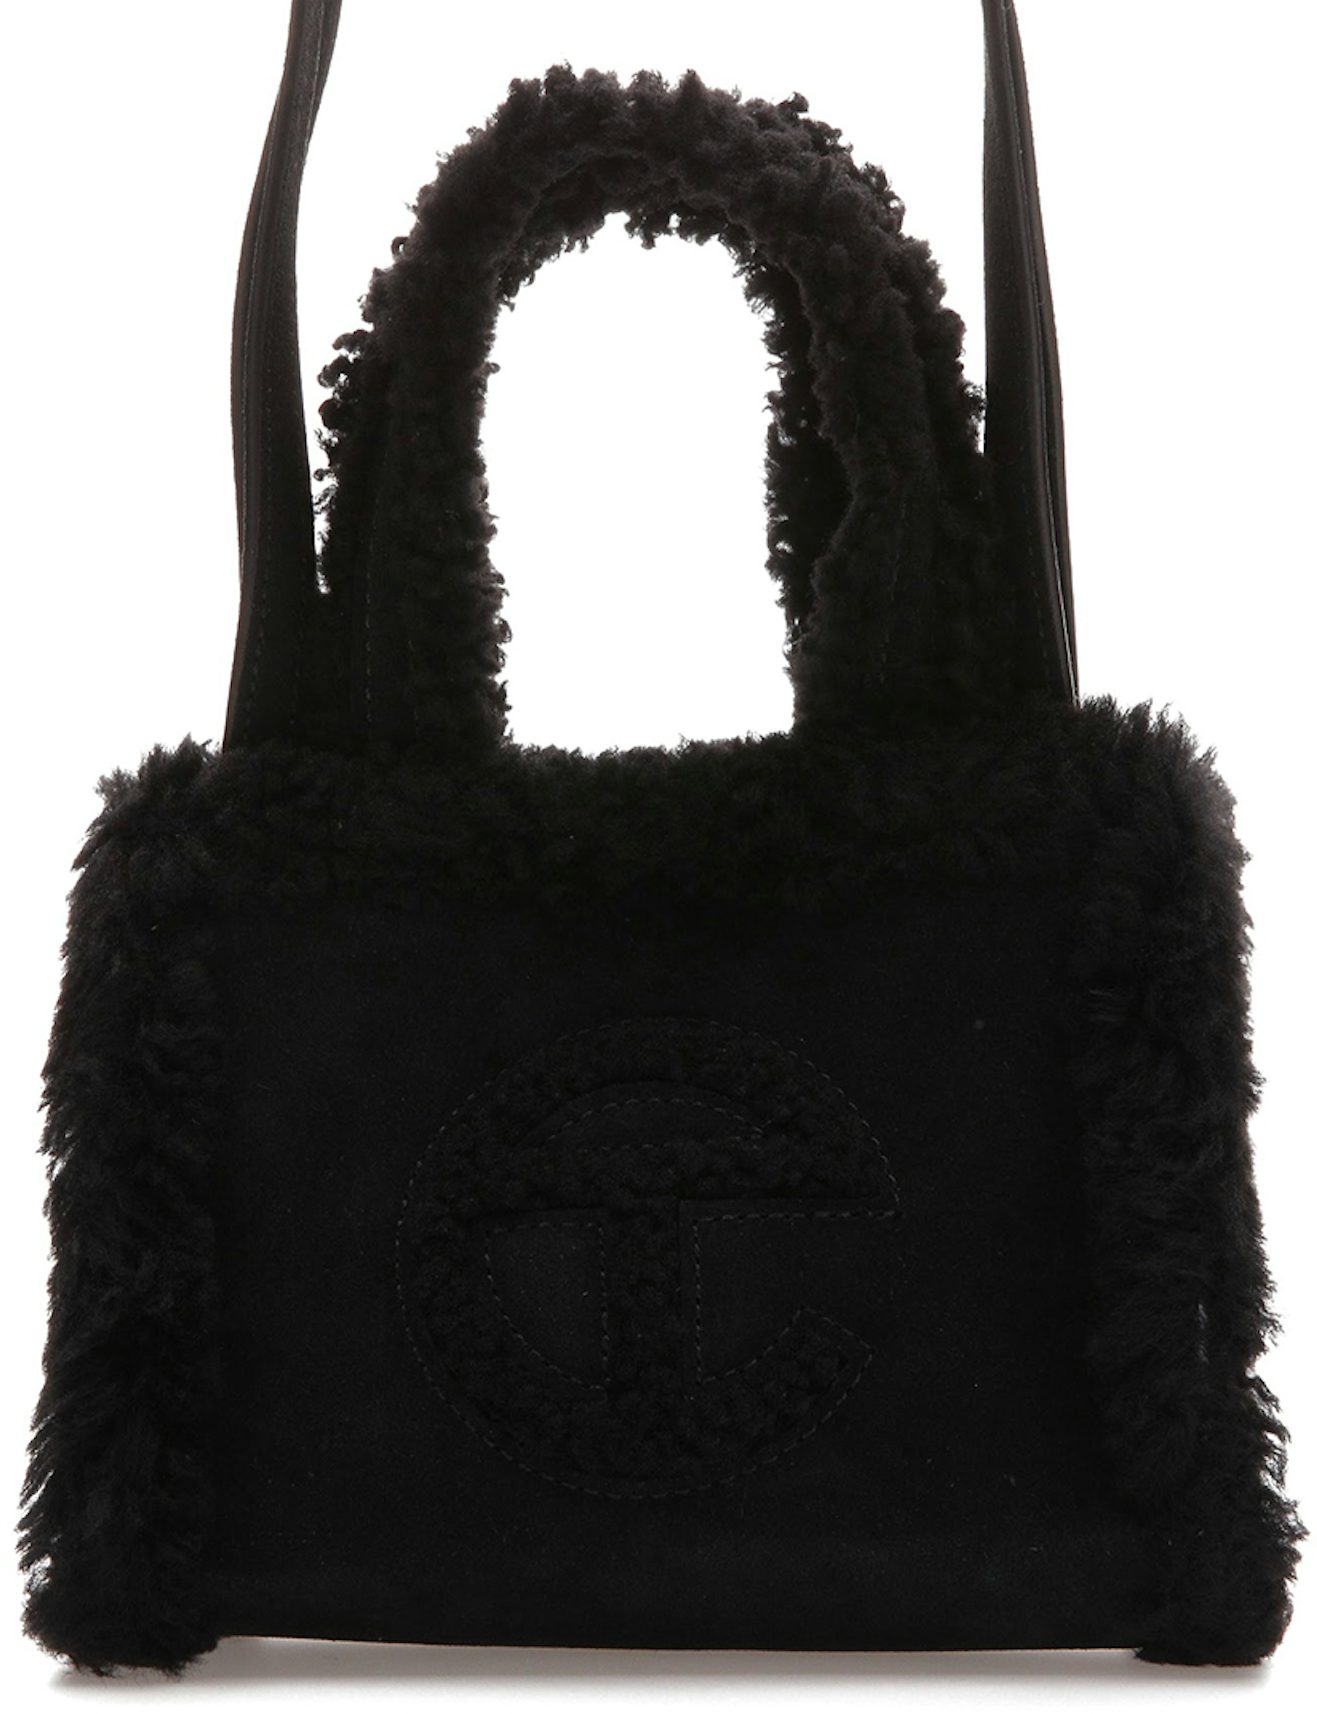 Telfar x UGG Shopping Bag Small Black in Shearling/Leather - US